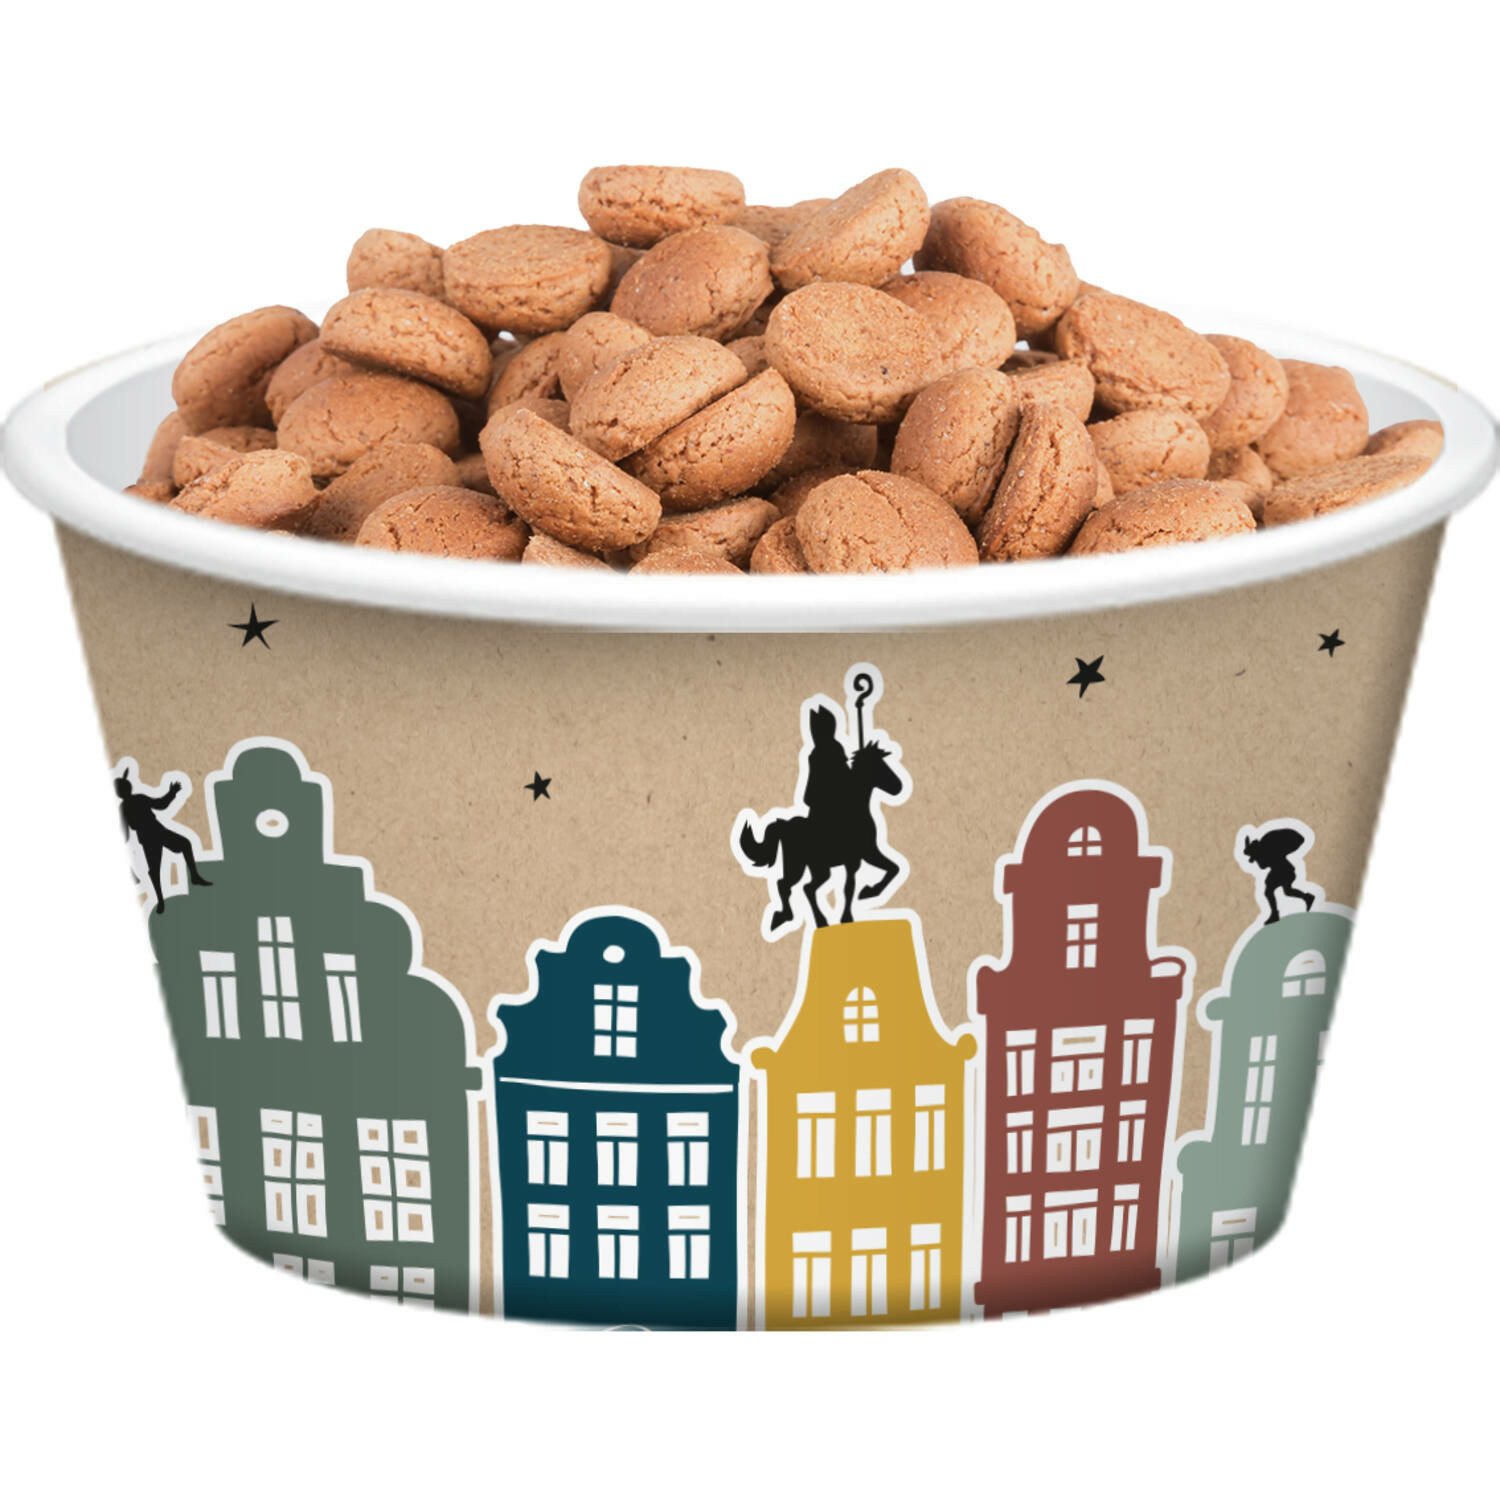 Sinterklaas pepernoot-snoep bakjes papier met Welkom Sint en Piet print 5x stuks 250 ml